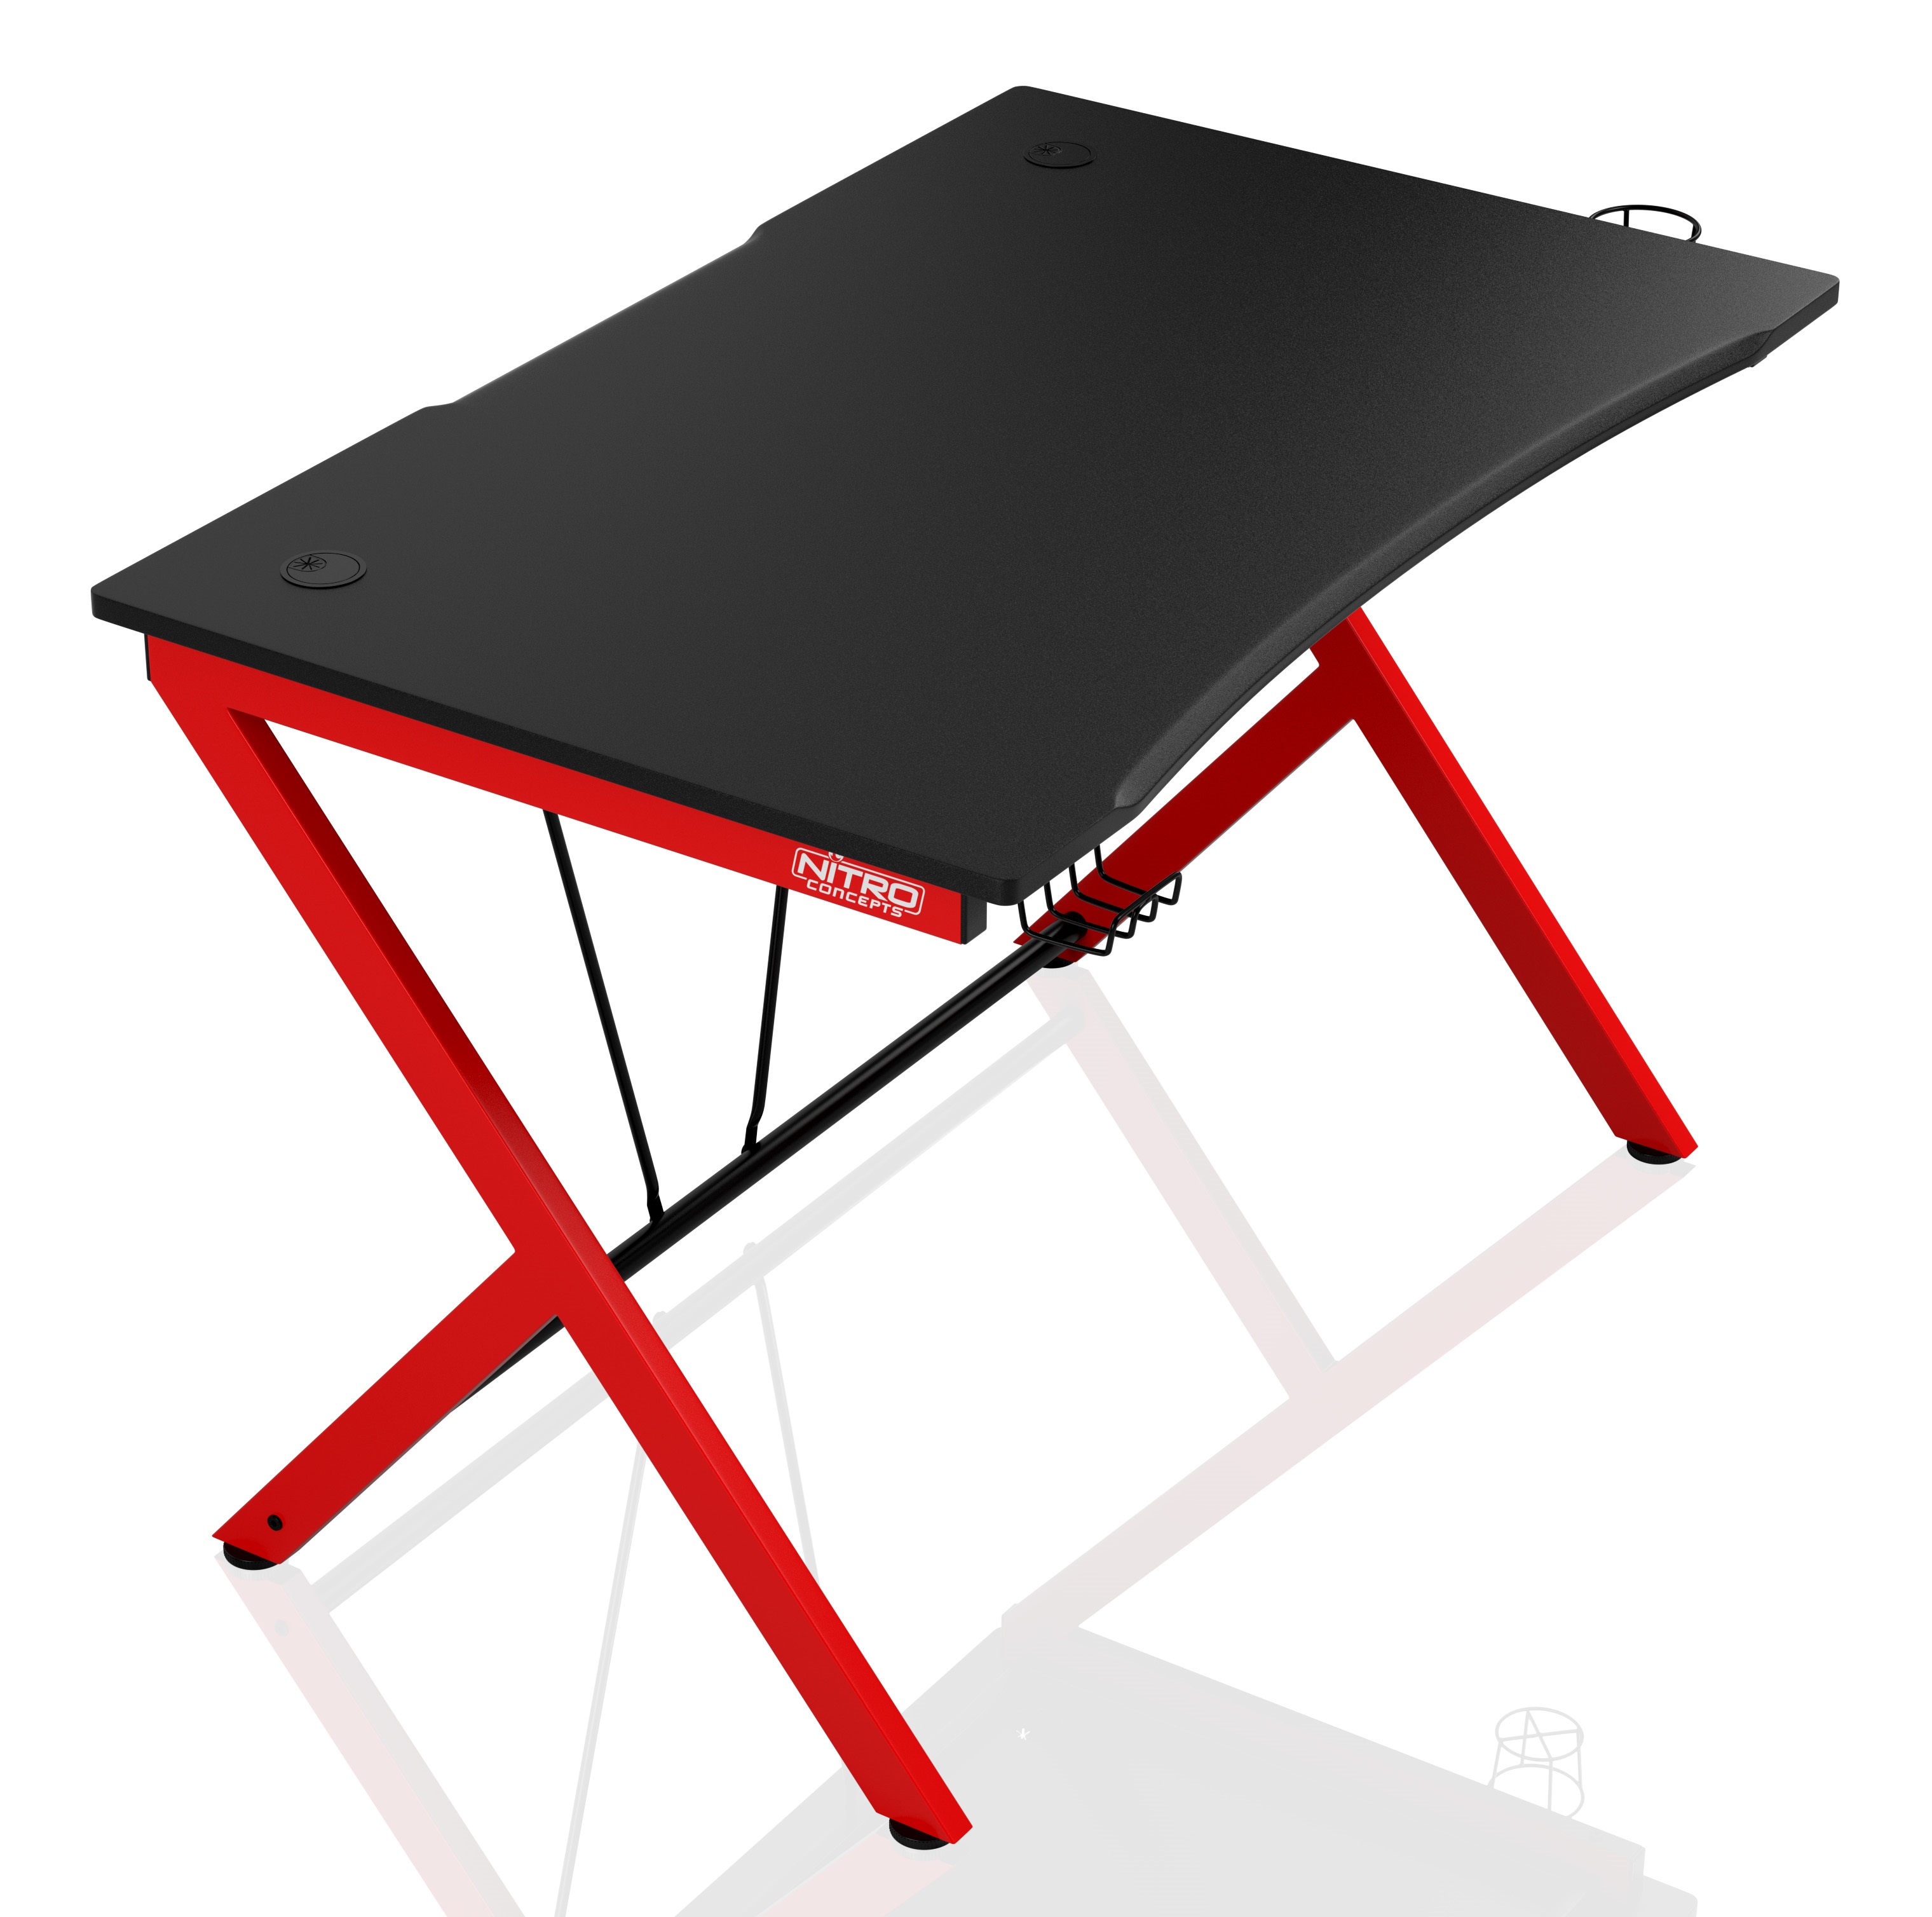 Nitro Concepts - Nitro Concepts D12 Gaming Desk - Black/Red